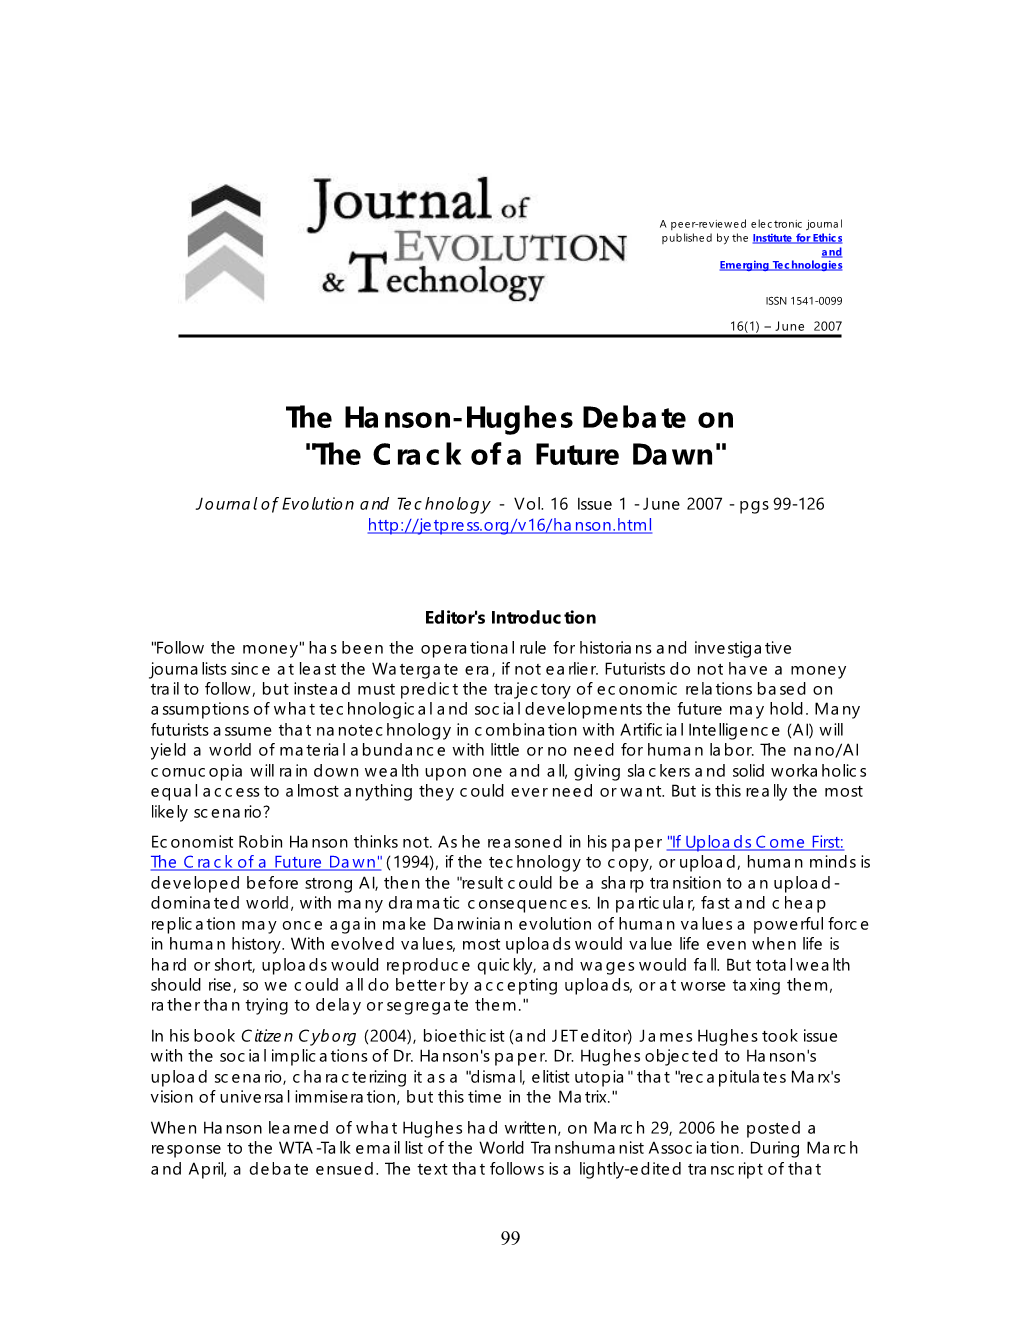 The Hanson-Hughes Debate on "The Crack of a Future Dawn"